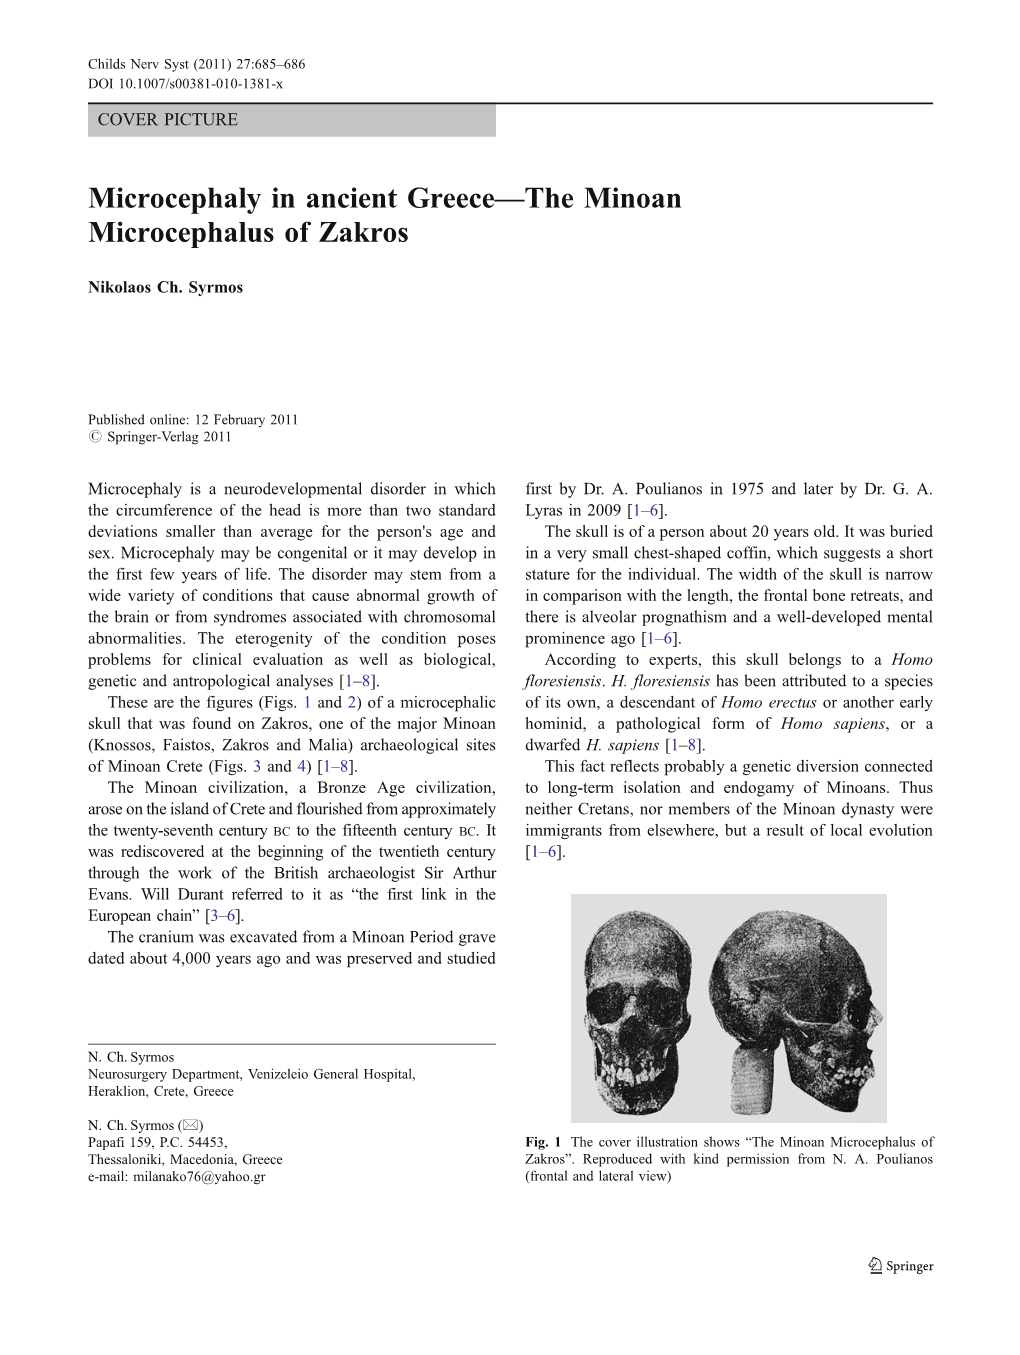 Microcephaly in Ancient Greece—The Minoan Microcephalus of Zakros